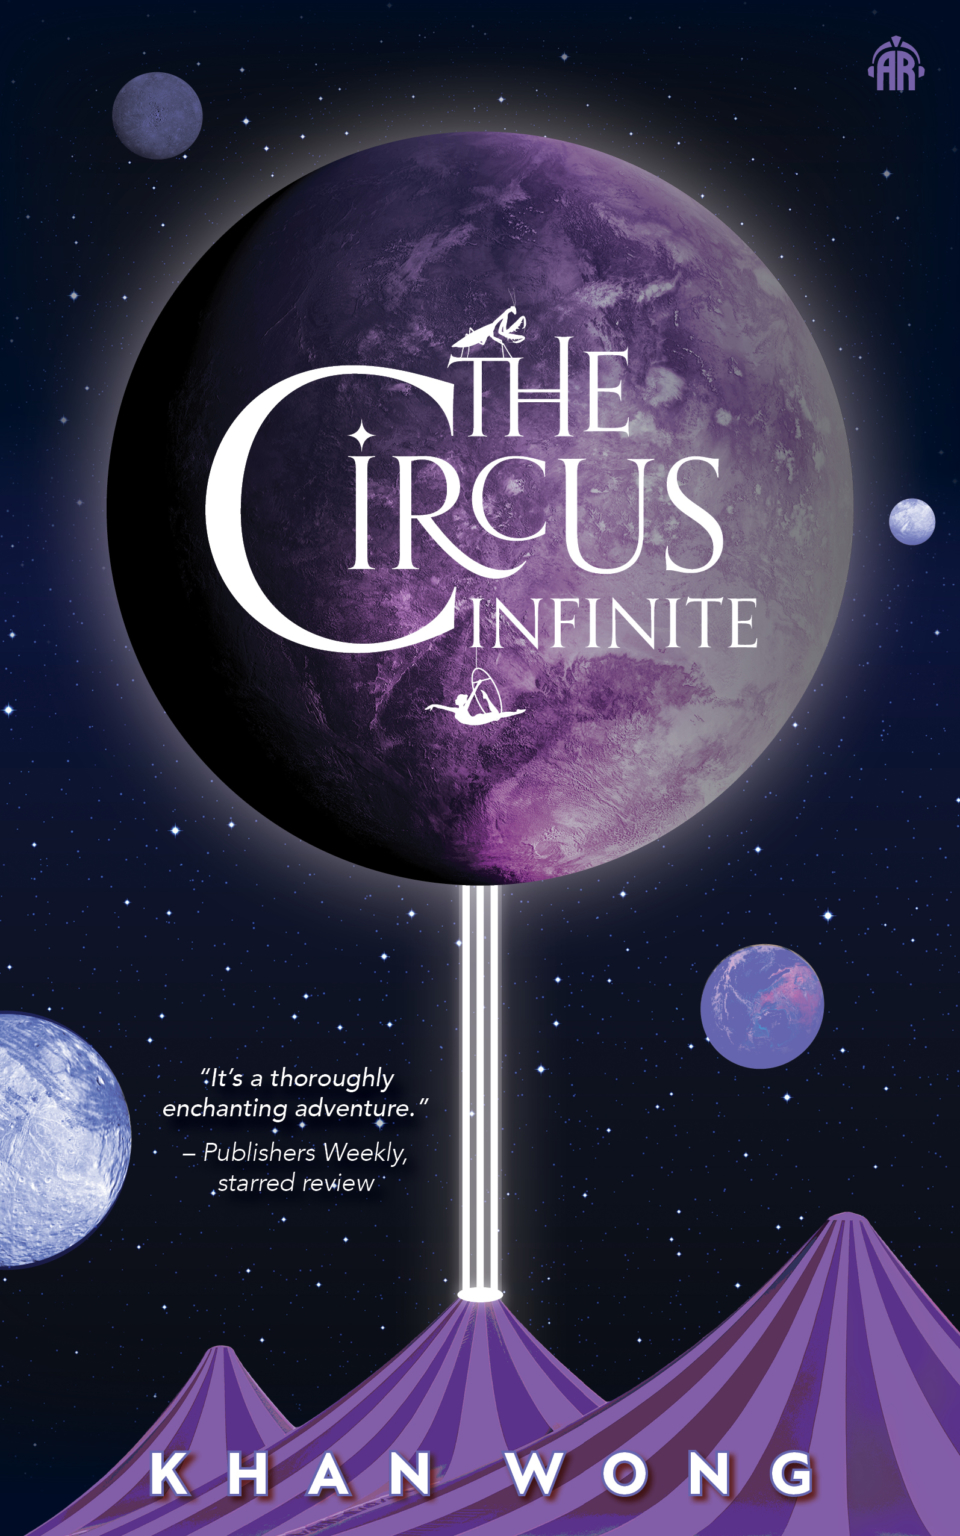 The Circus Infinite by Khan Wong